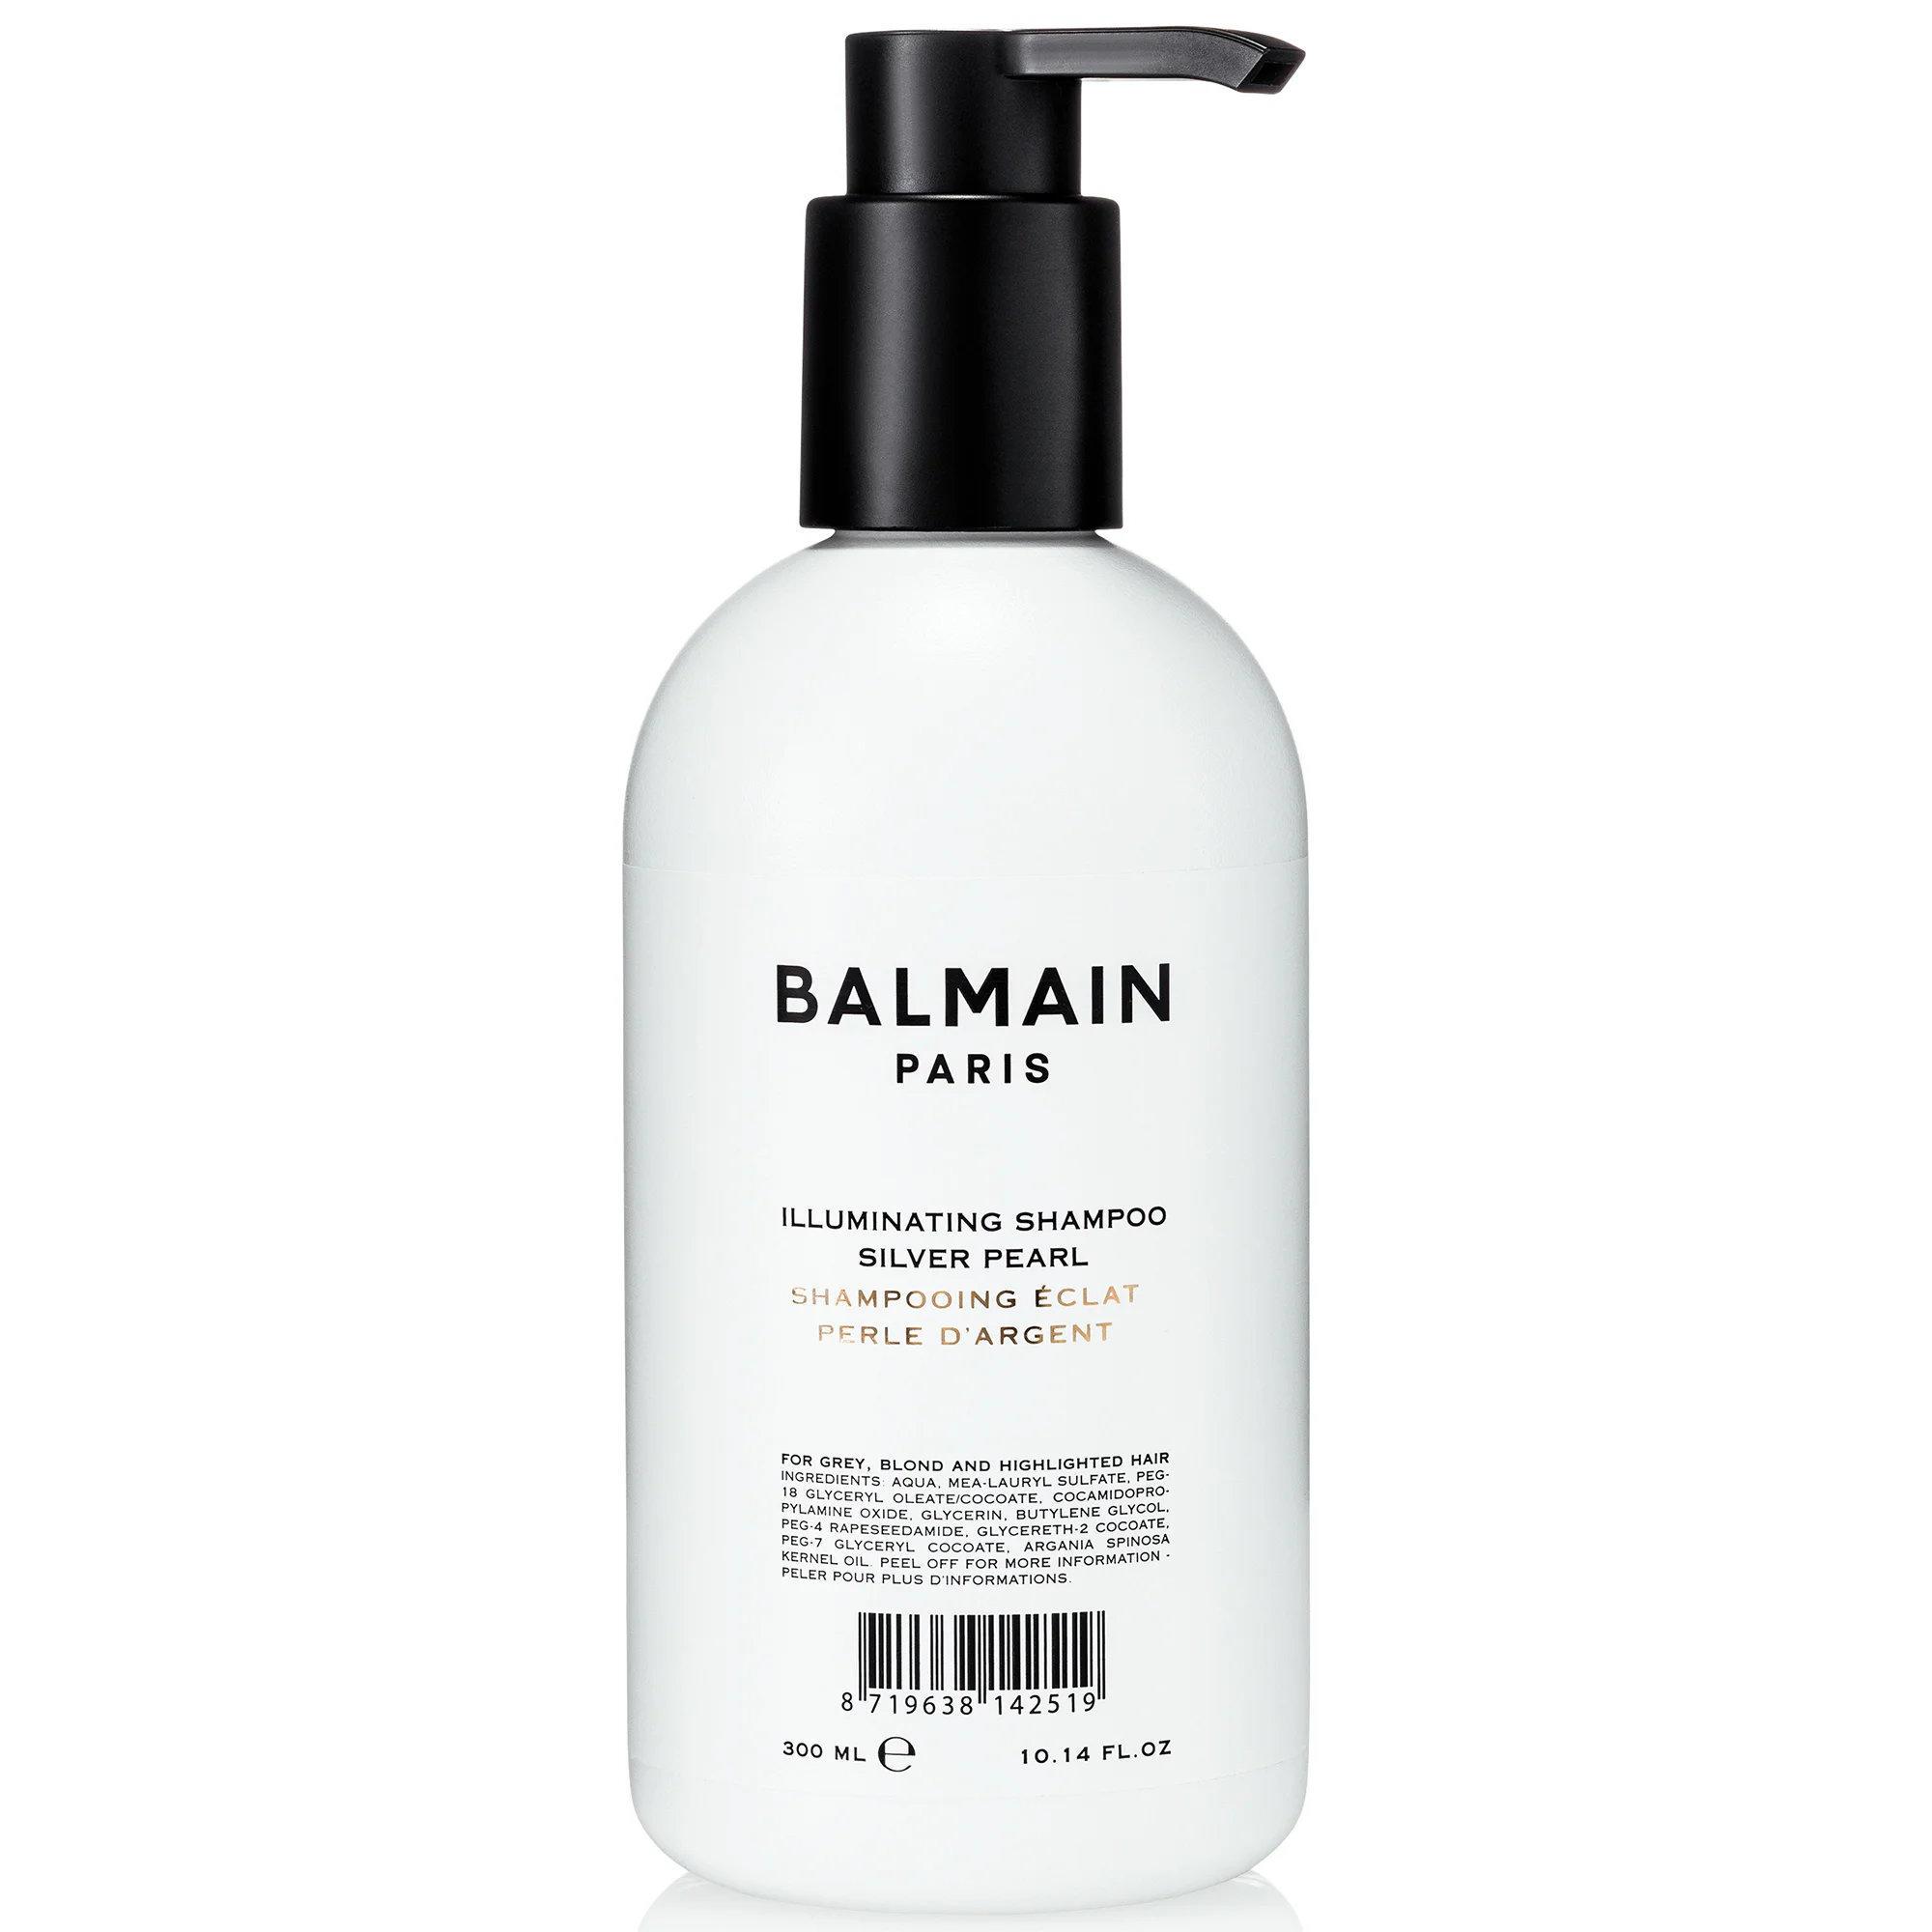 Balmain Hair Illuminating Shampoo - Silver Pearl 300ml Image 1